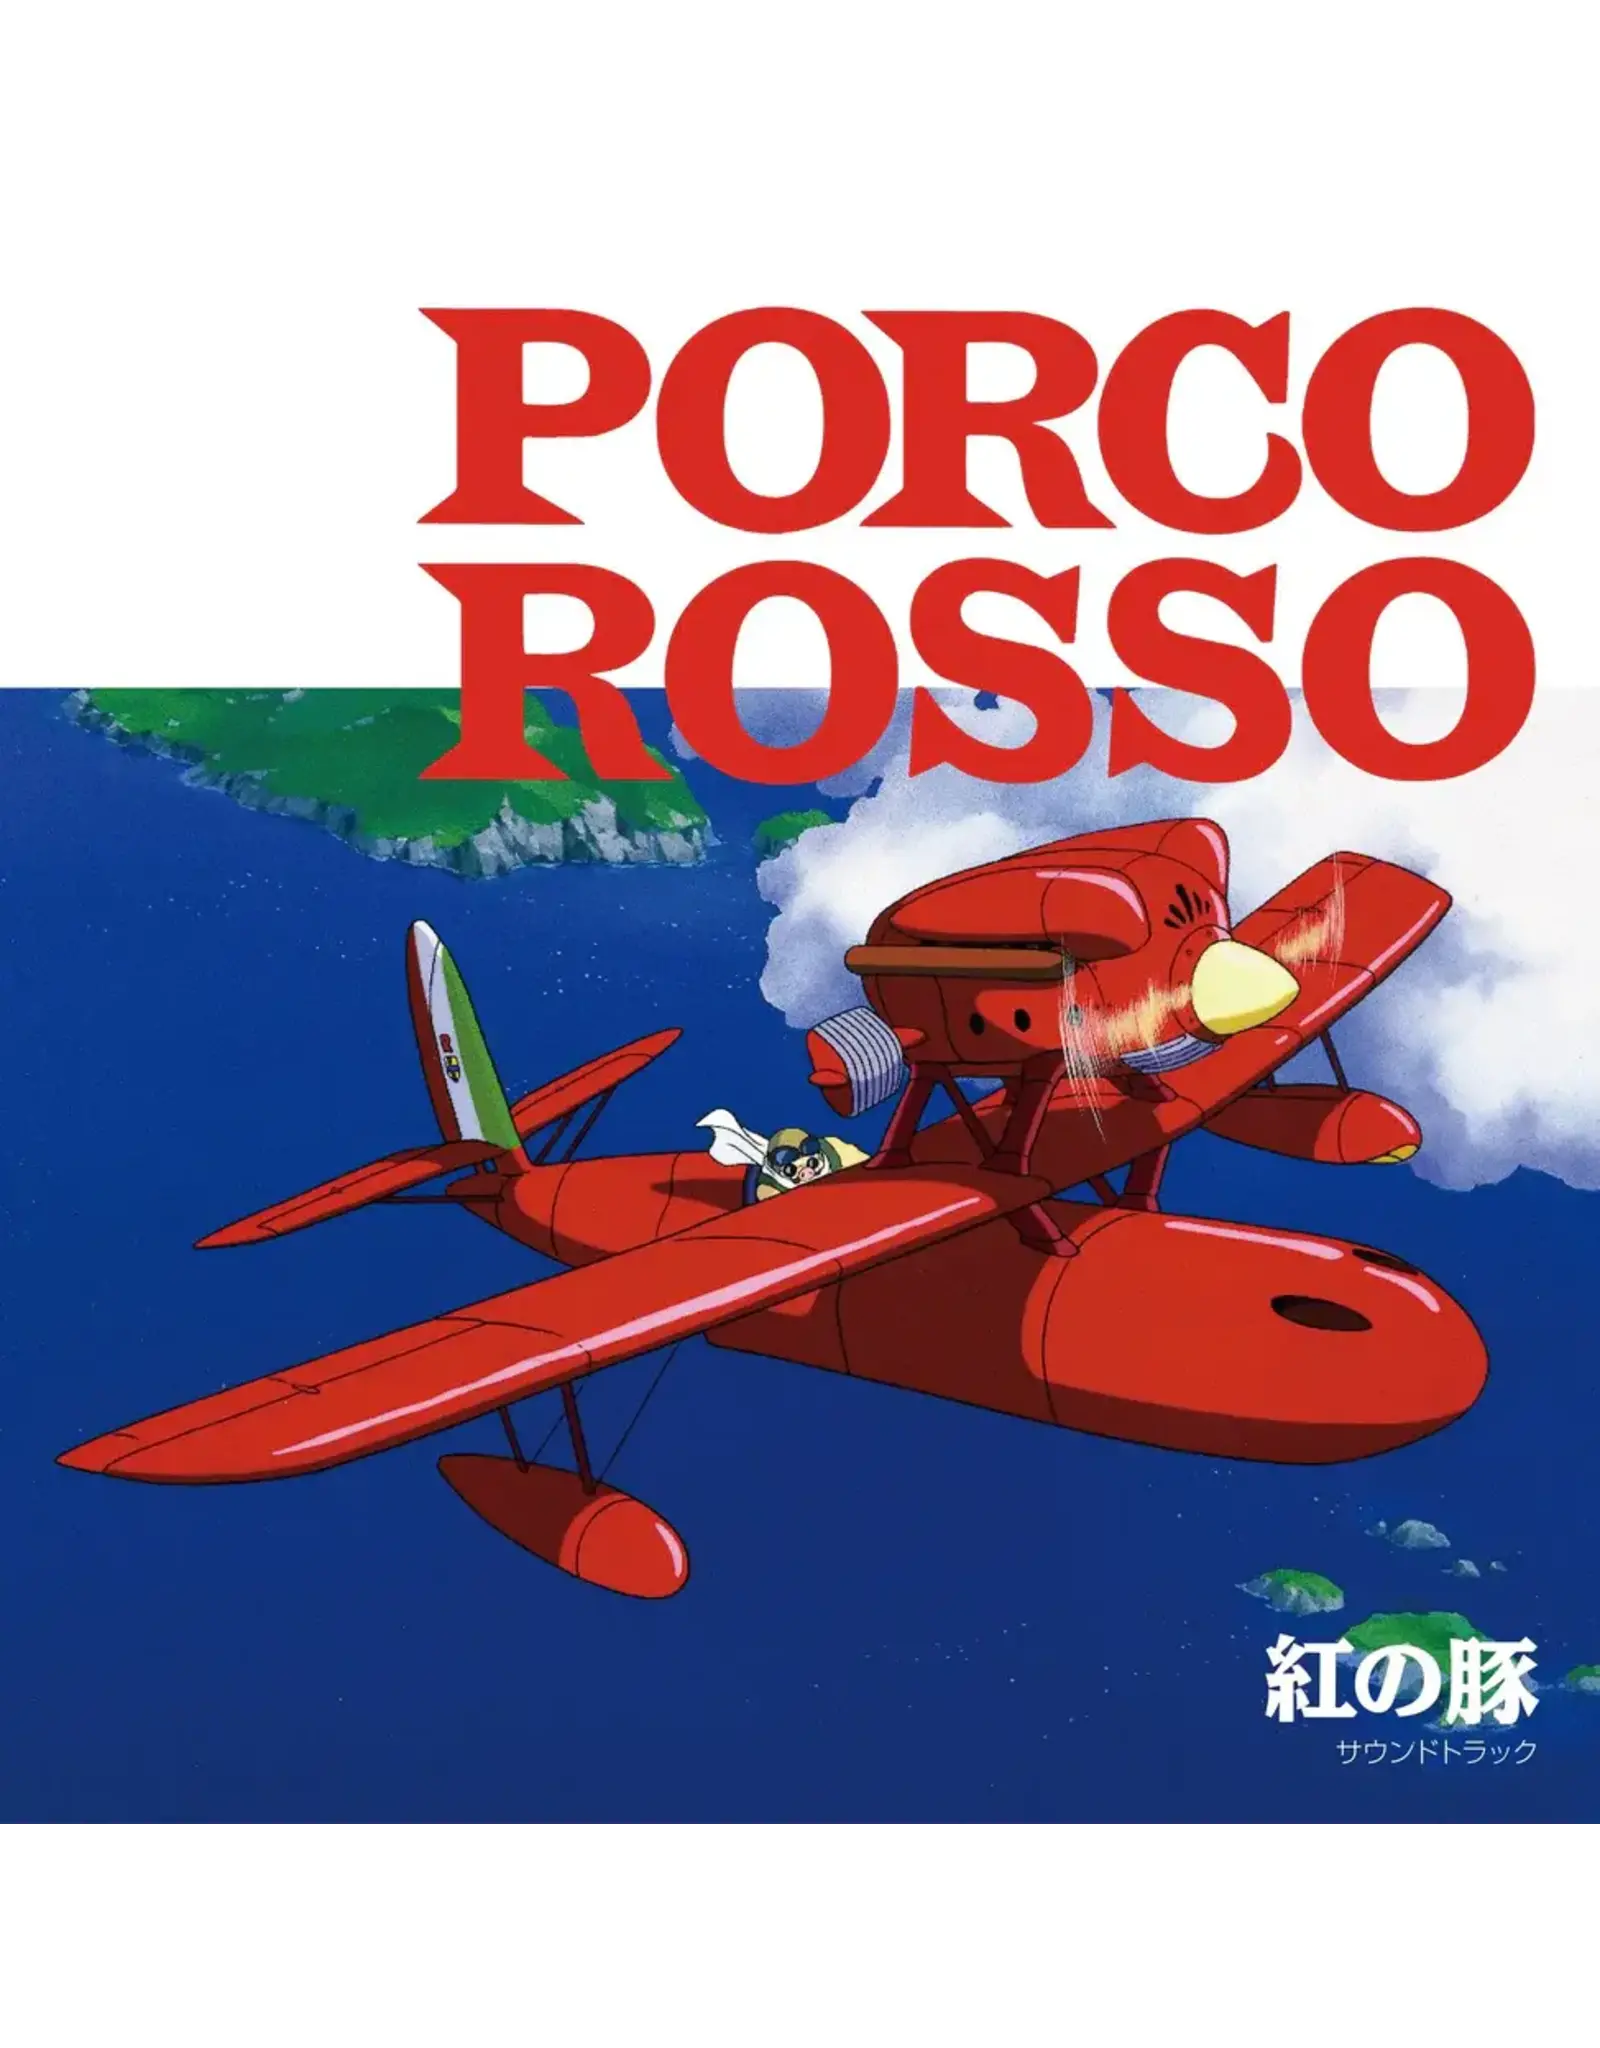 Studio Ghibli Hisaishi, Joe: Porco Rosso: Soundtrack LP